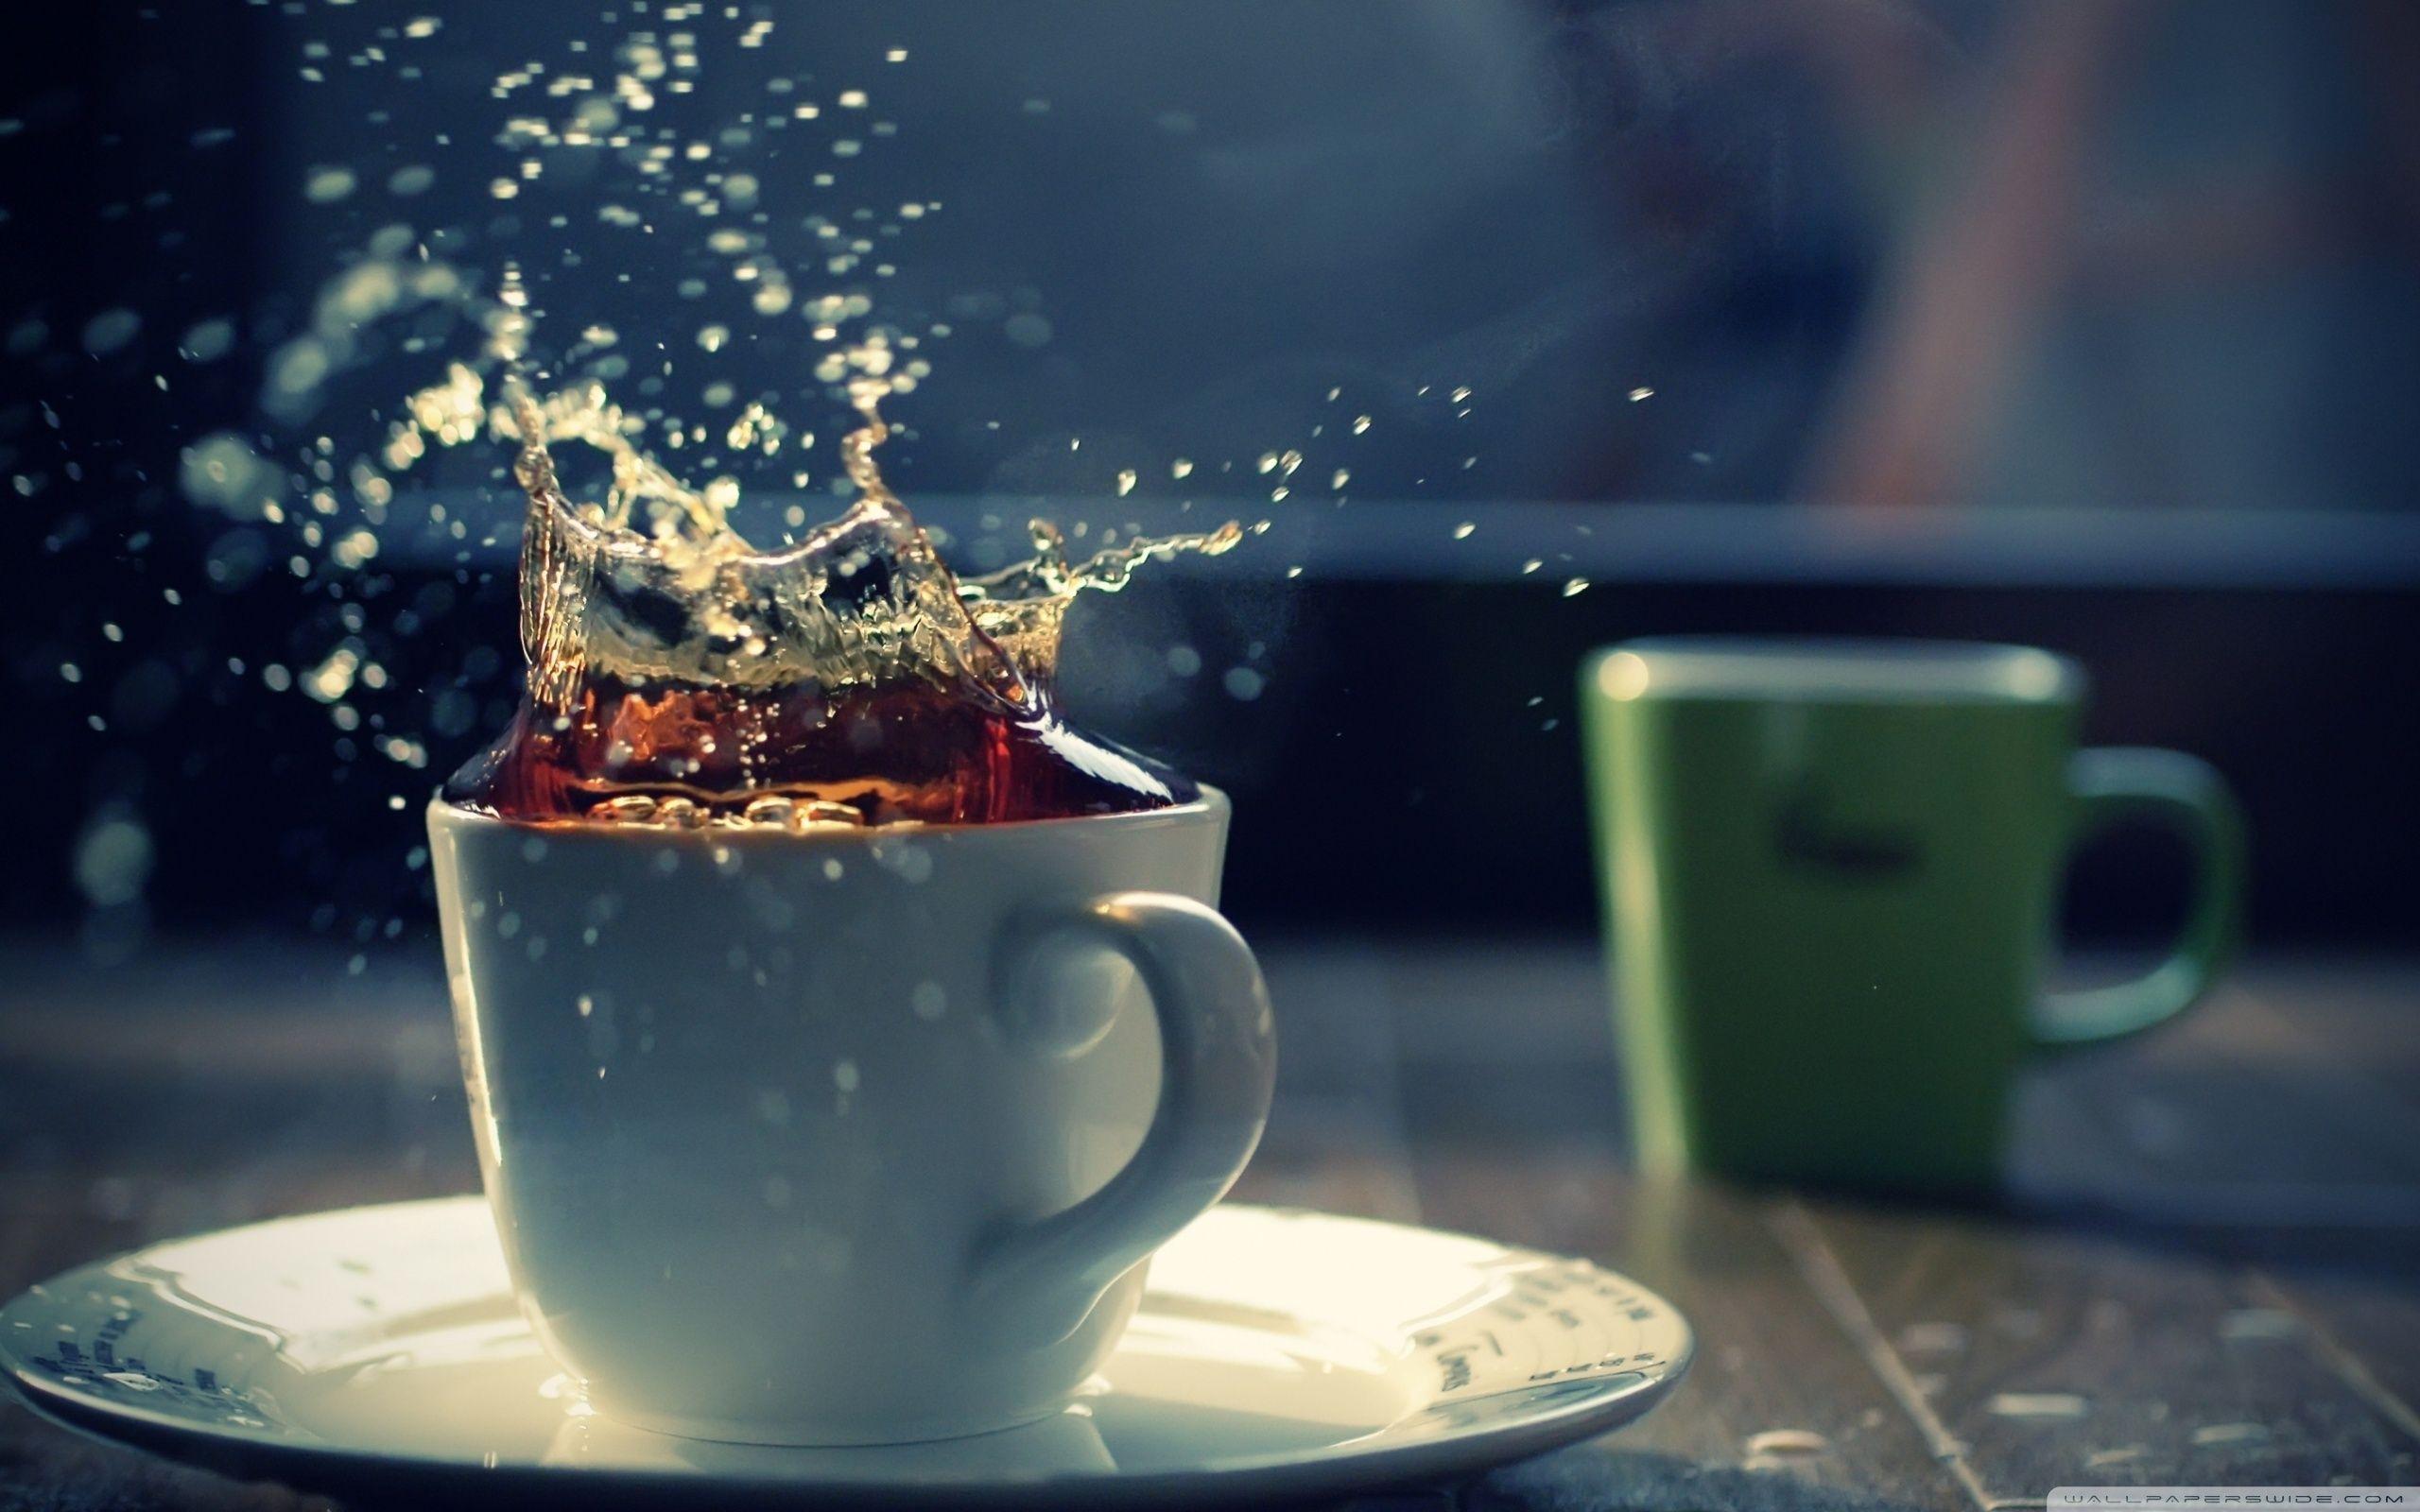 Black Tea: is referred to as 'fermented' tea. The tea leaves